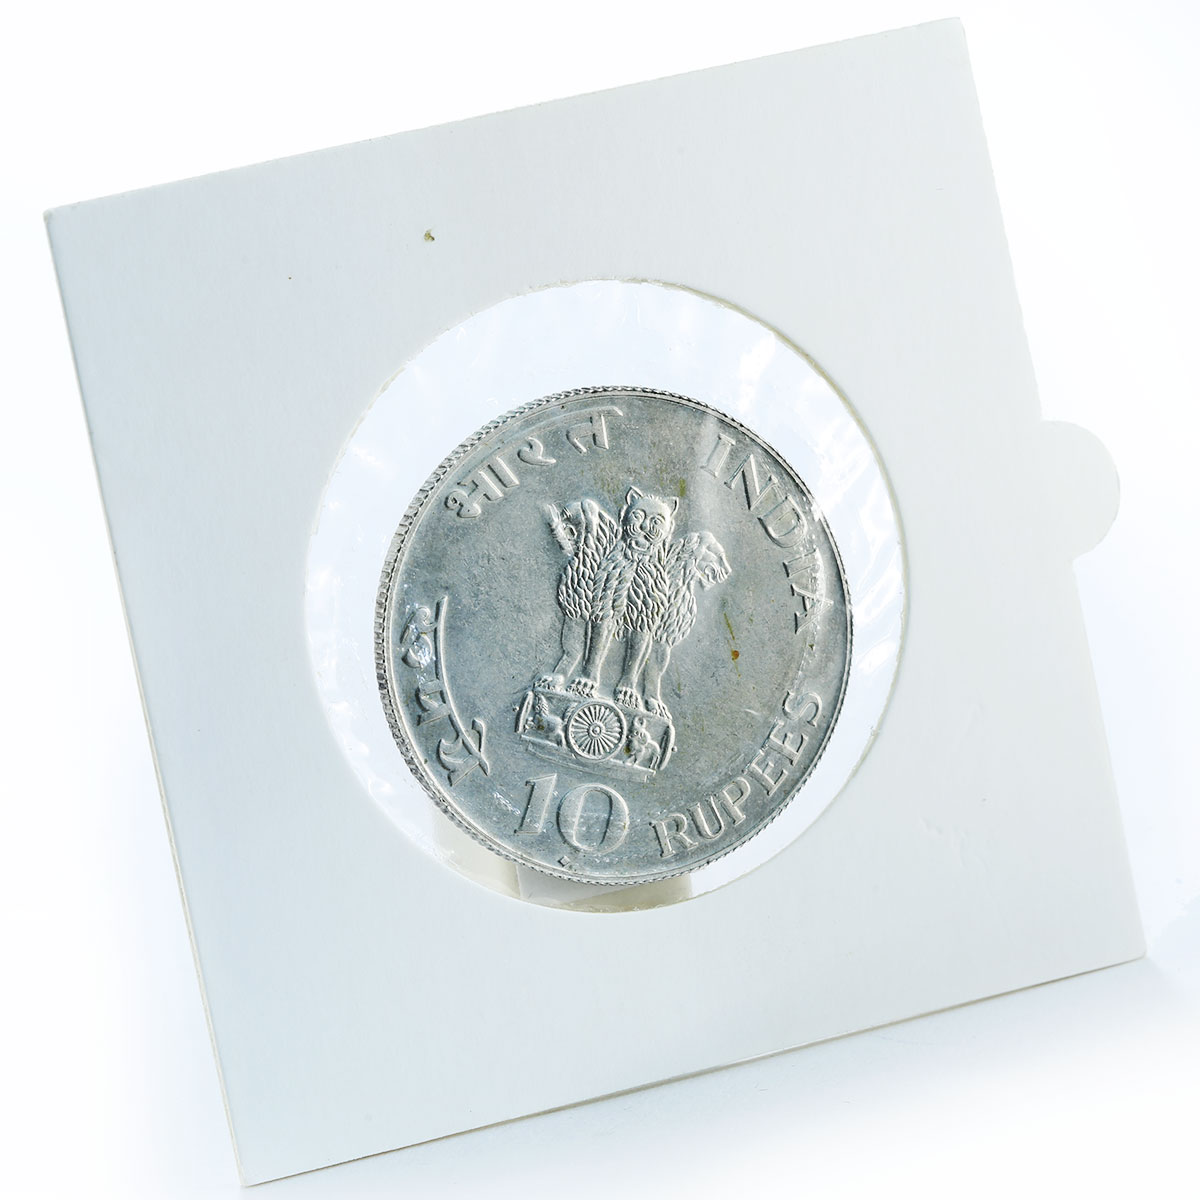 India 10 rupees Mahatma Gandhi 1869 -- 1948 portrait silver coin 1969